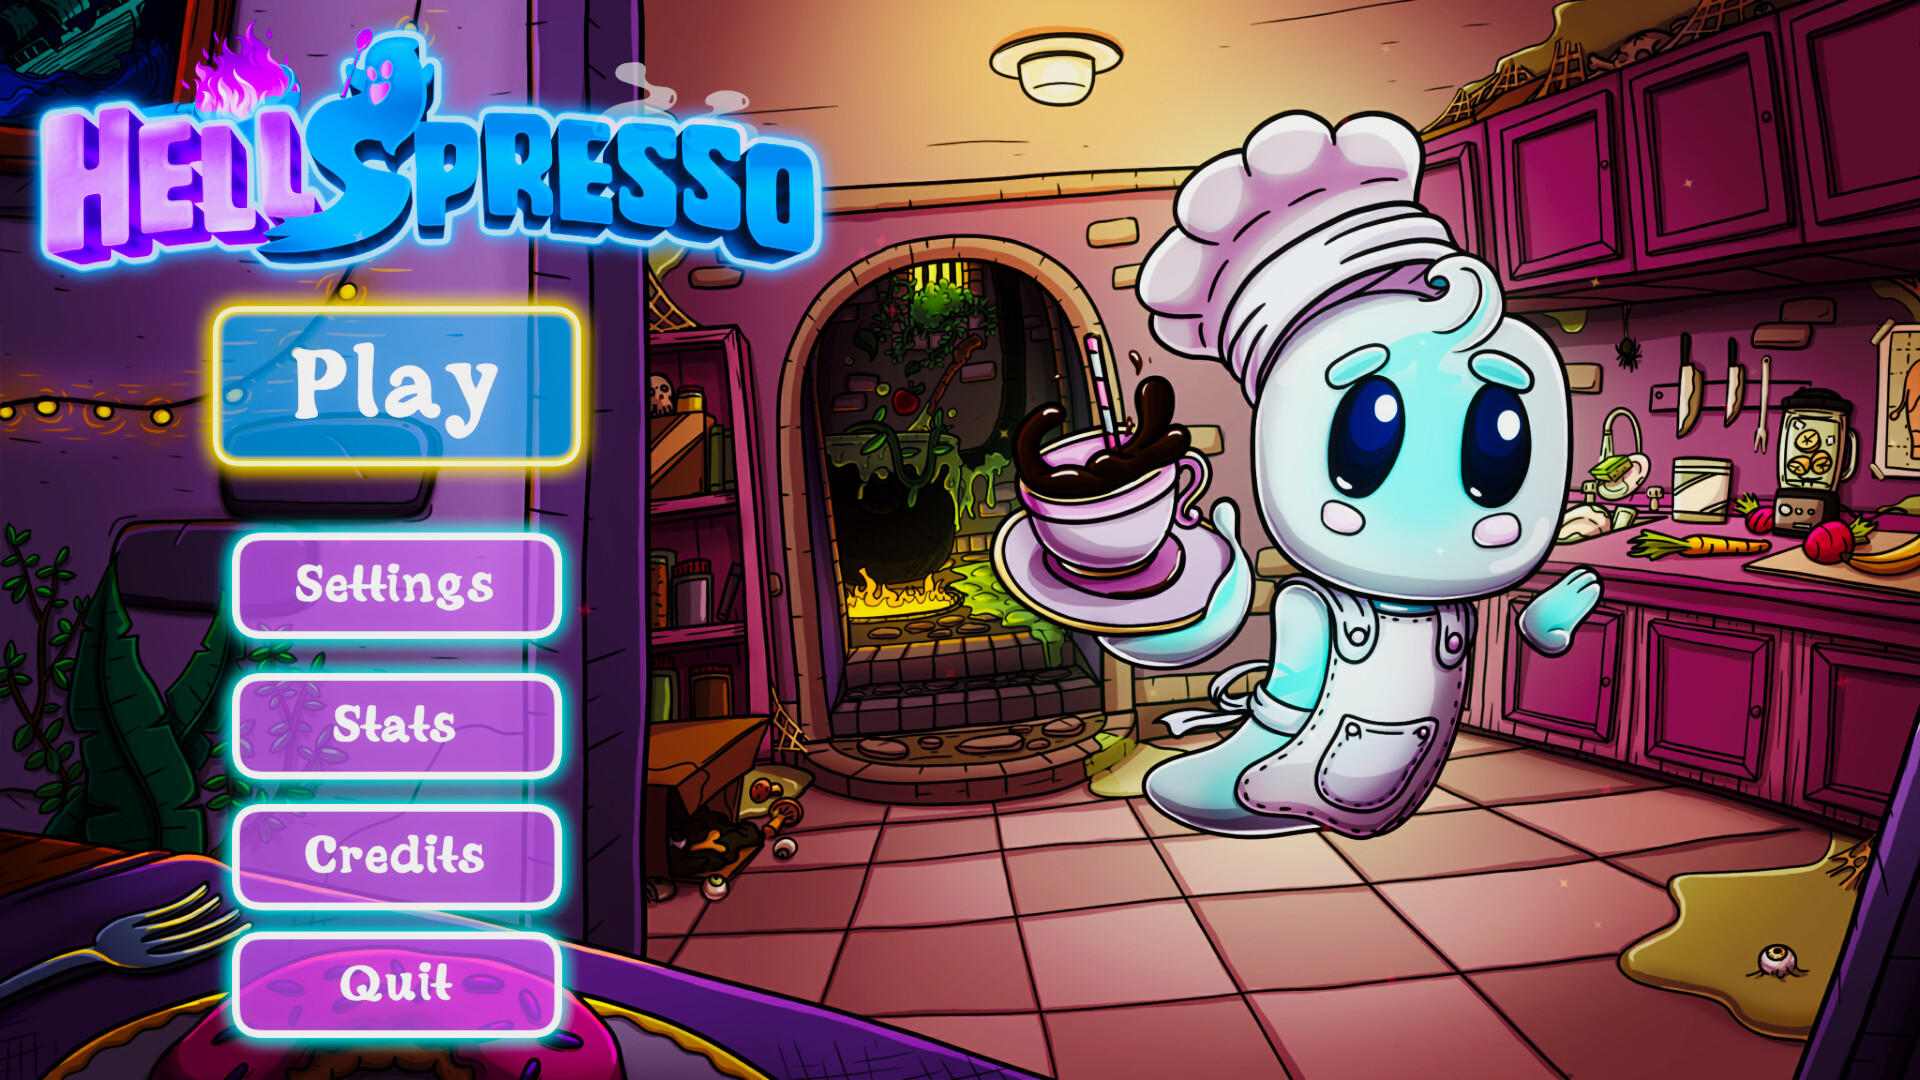 Hellspresso screenshot game